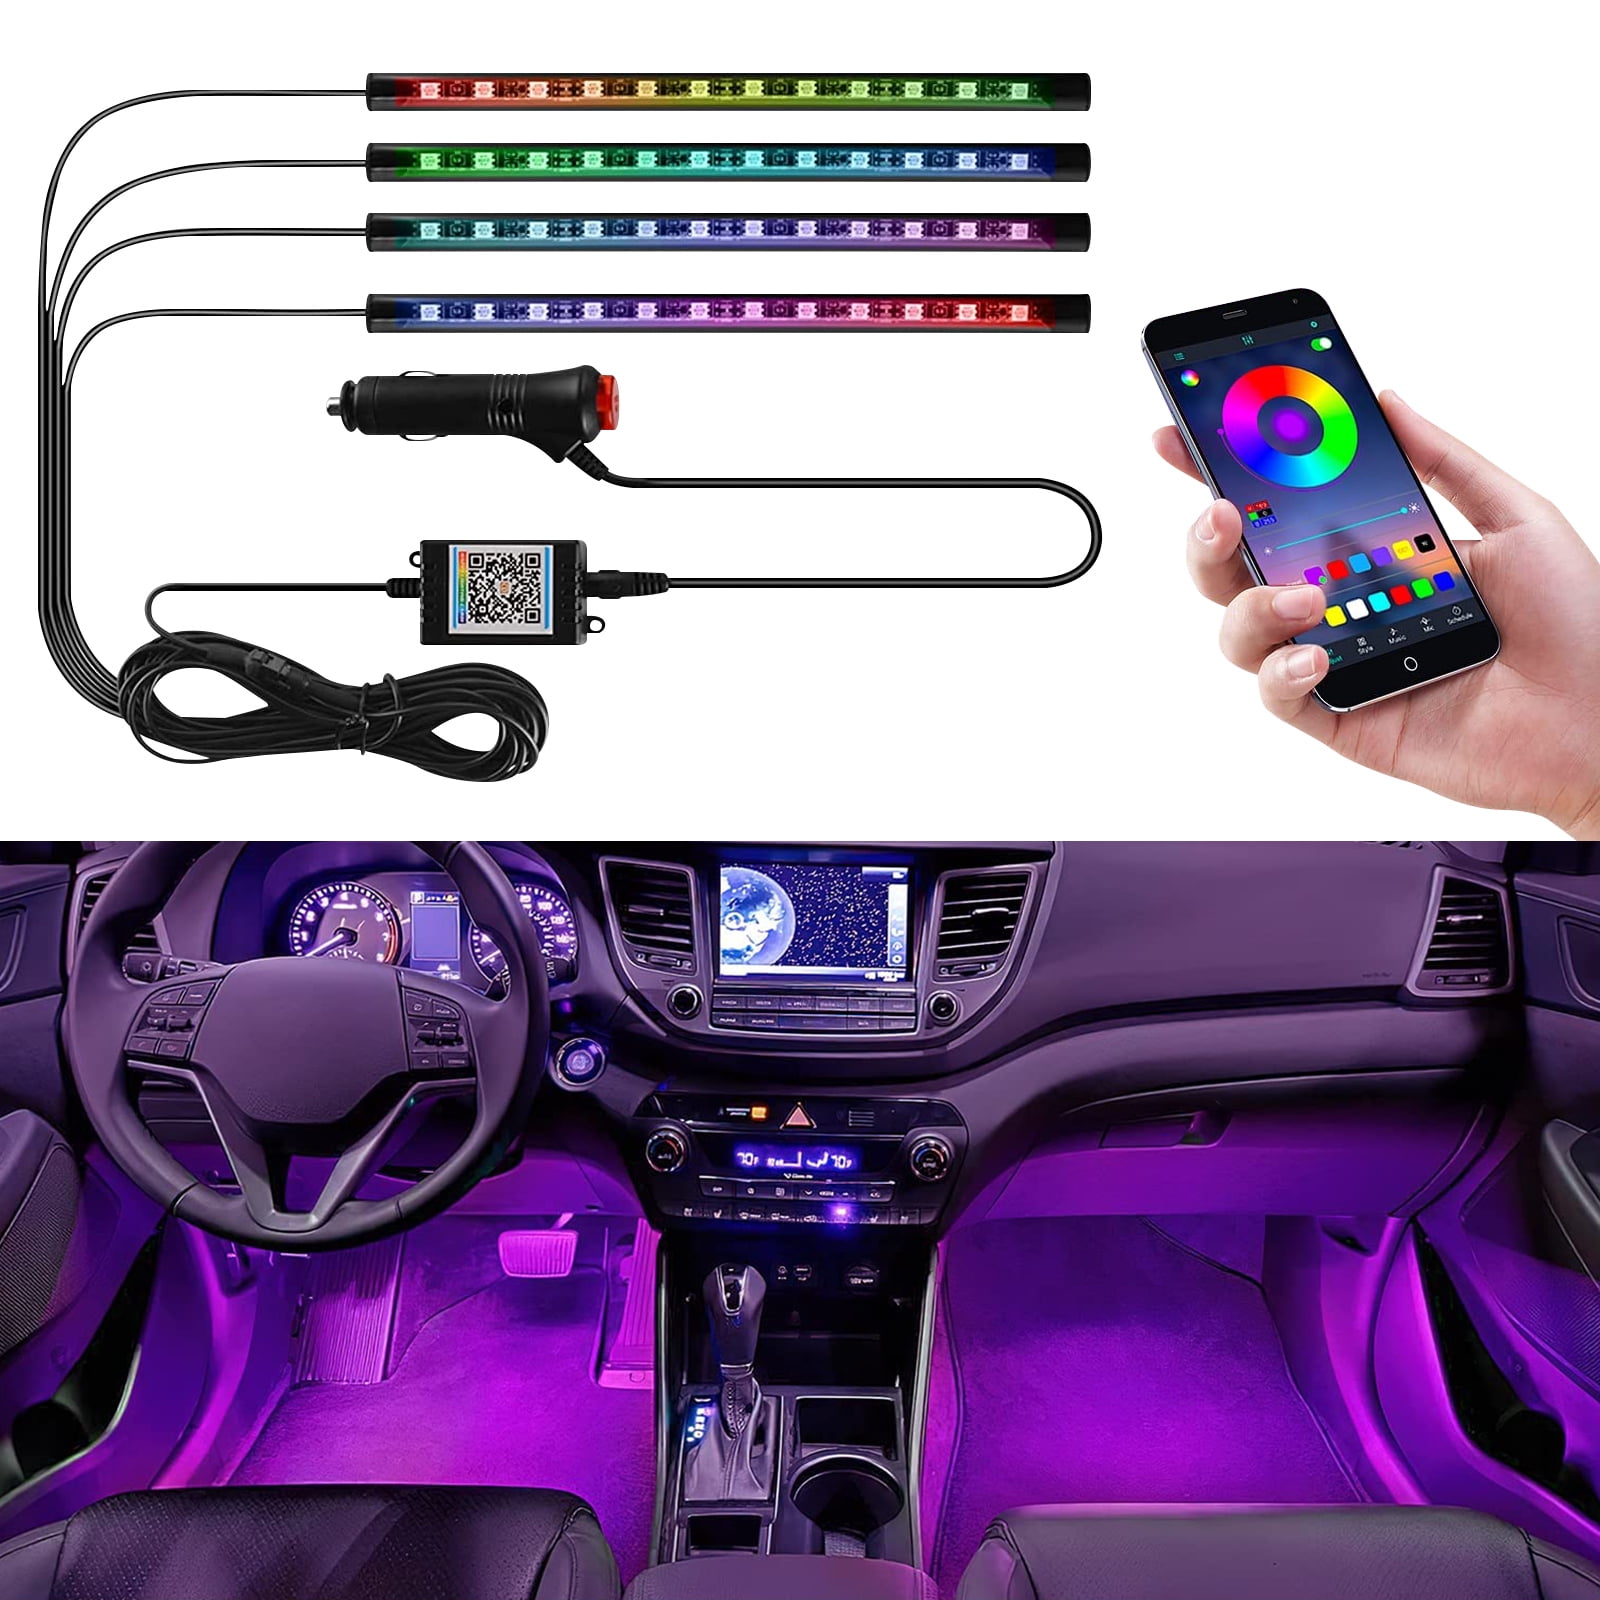 APP Control Car LED Lights, Smart Car LED Strip Lights, Interior Car Lights  with Music Mode and 16 Million Colors, Under Dash Lights for Cars, SUVs